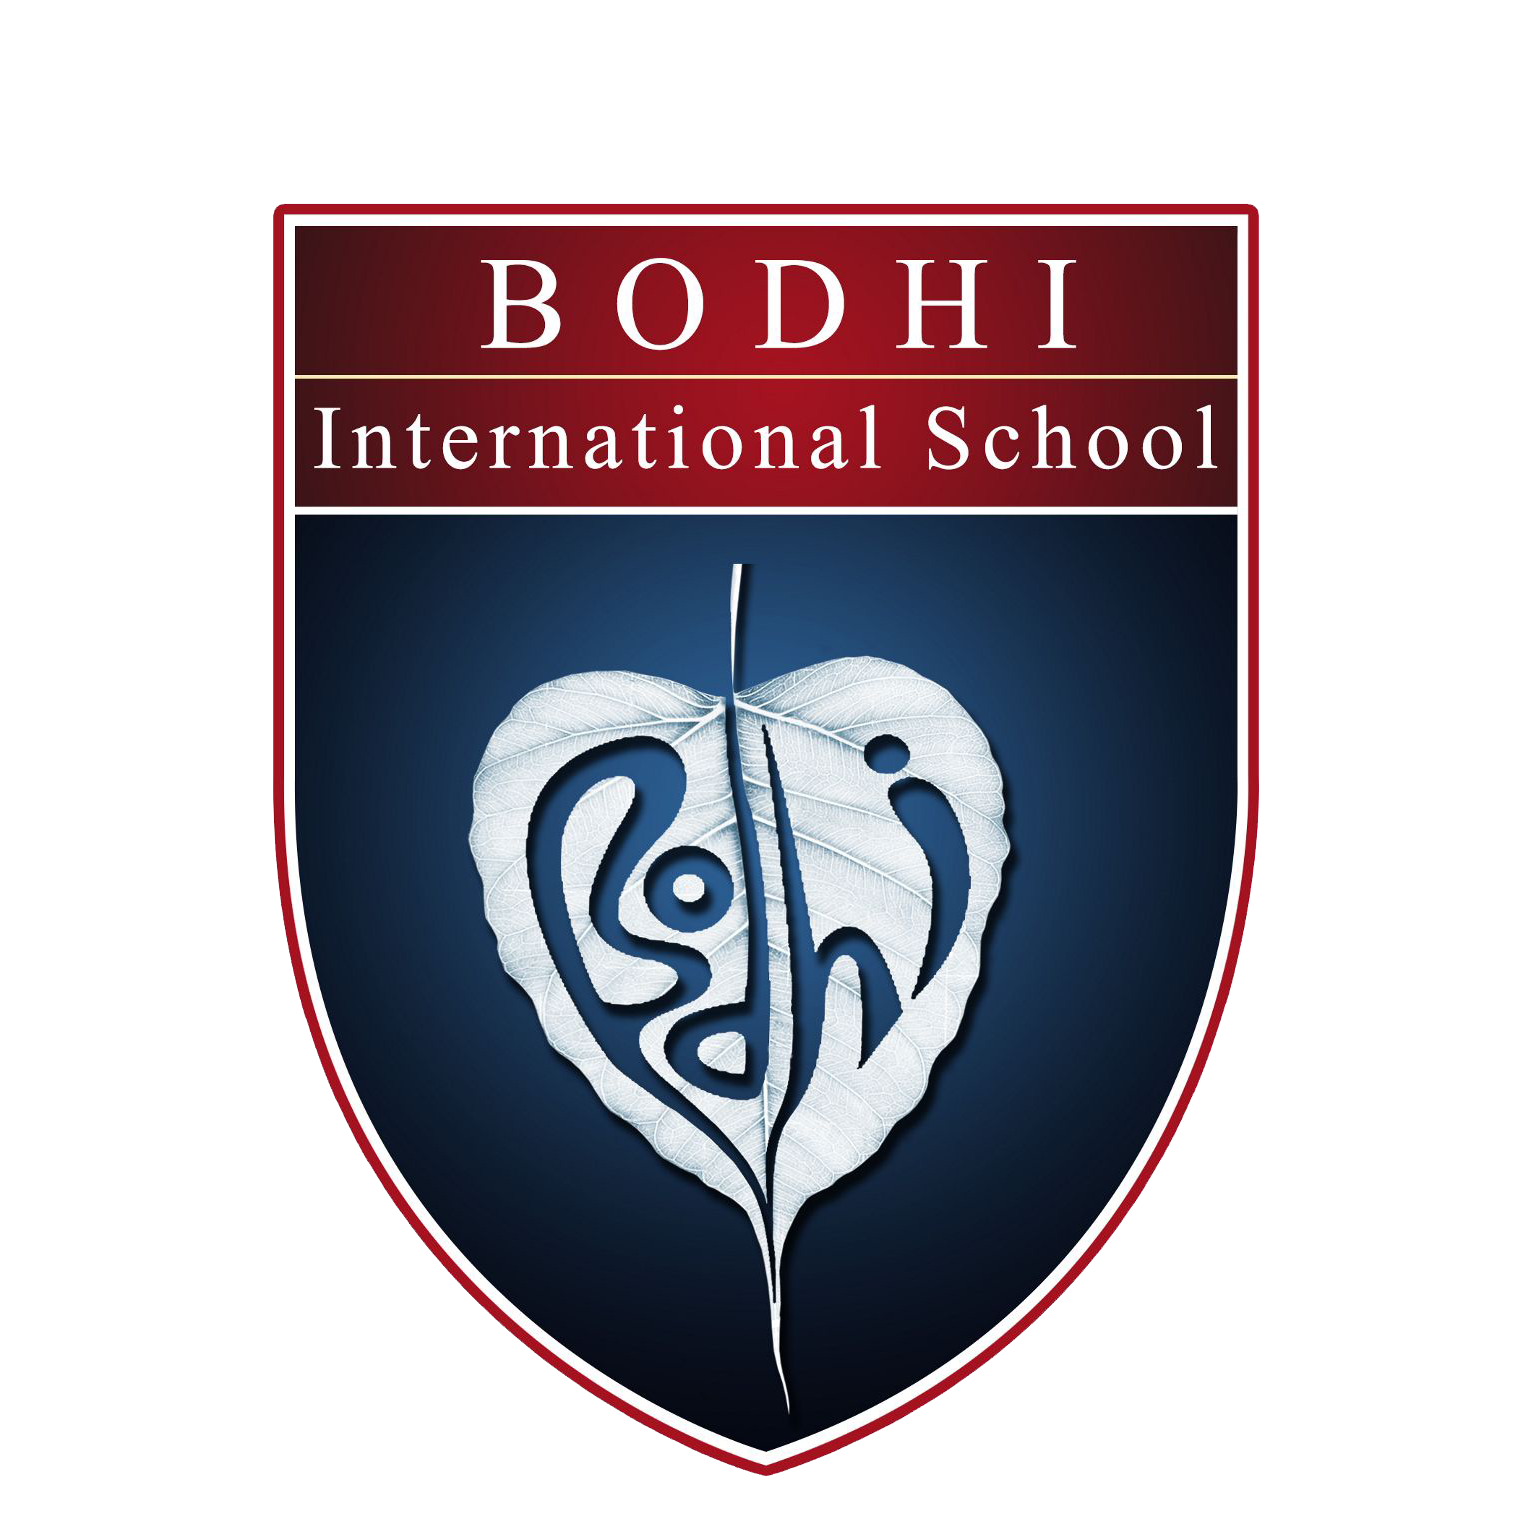 Bodhi International School